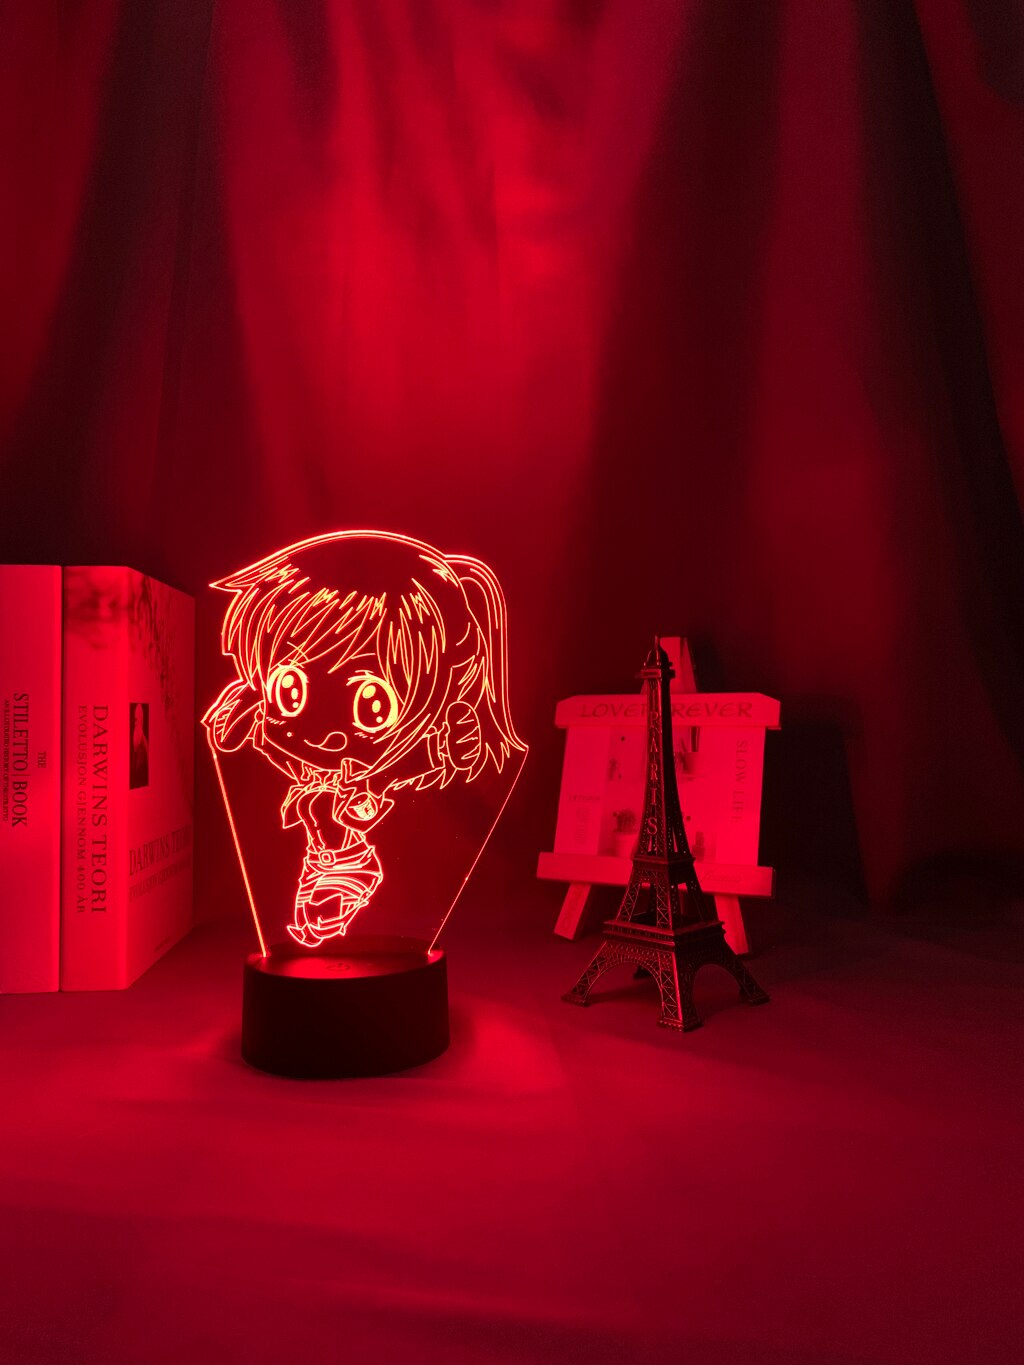 Attack on Titan – Sasha Chibi Themed Lighting Lamps (7/16 colors) Lamps